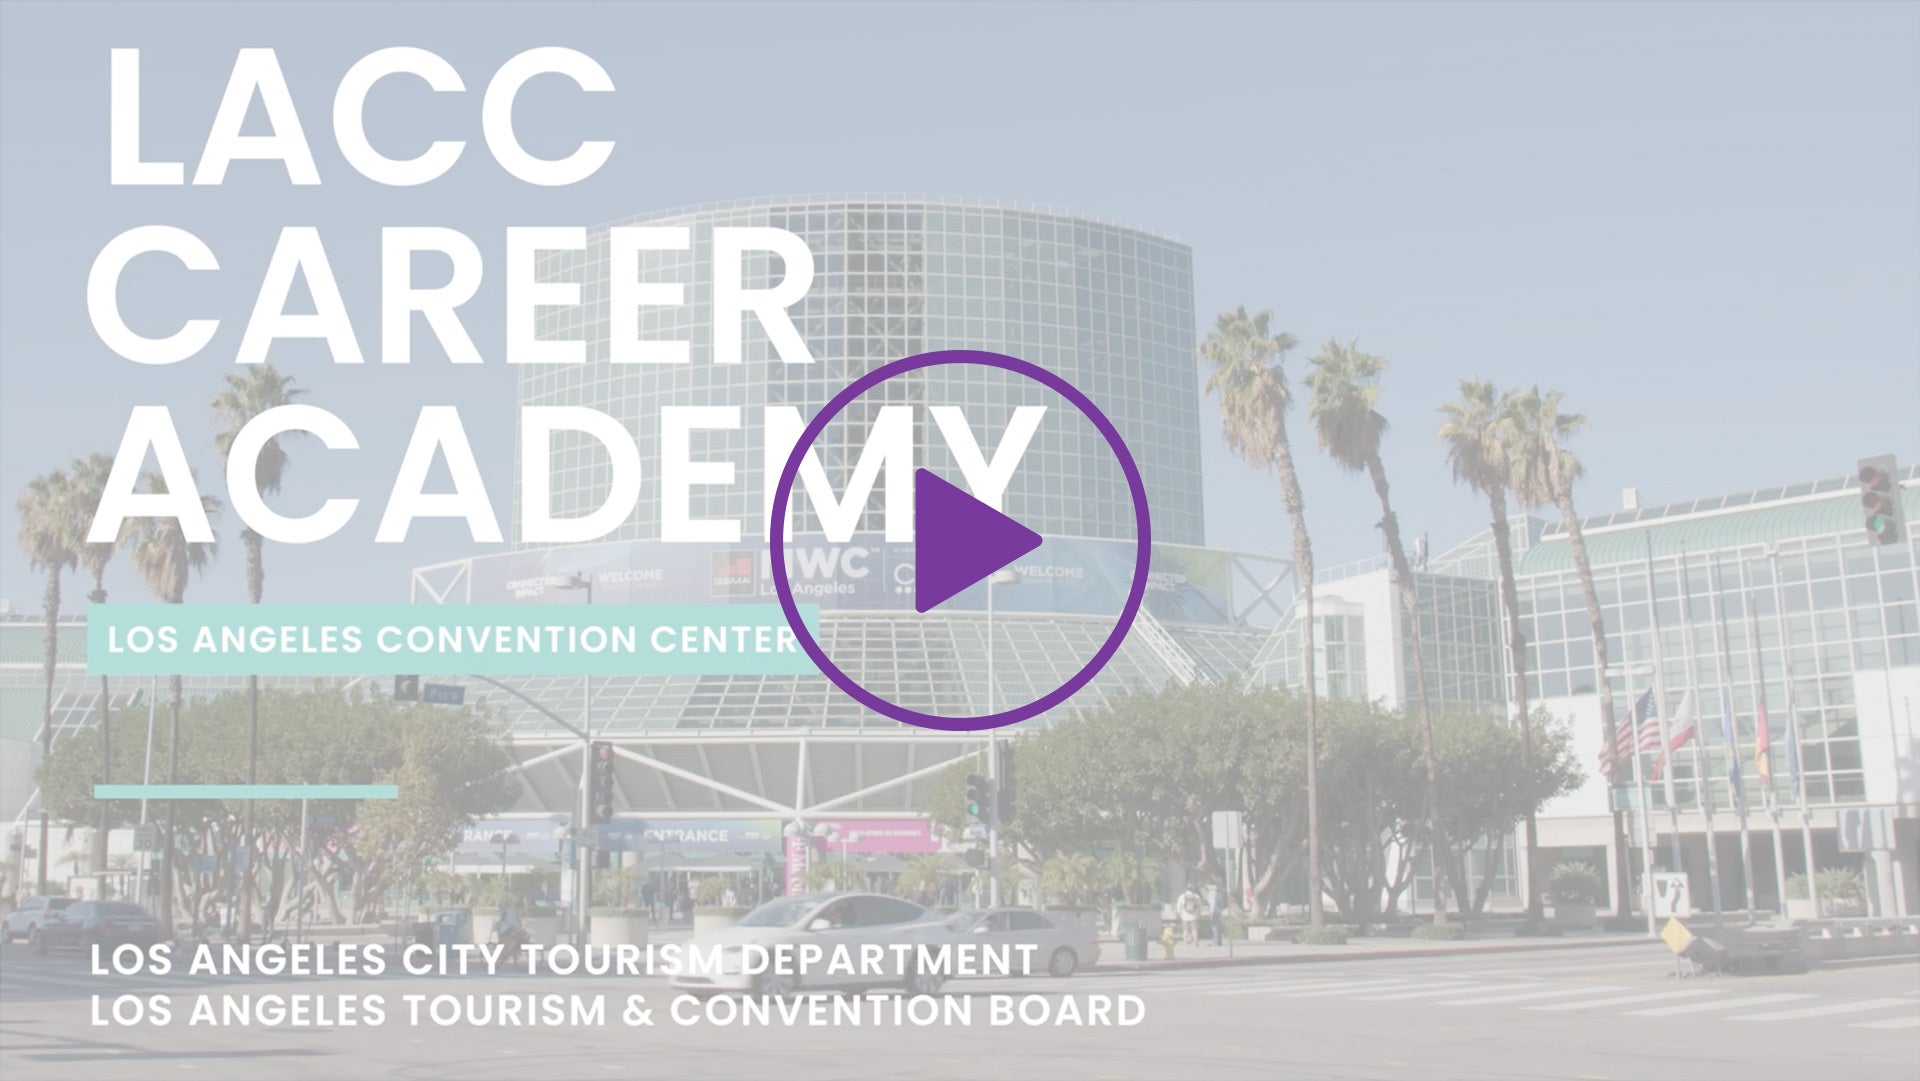 LACC Career Academy Video